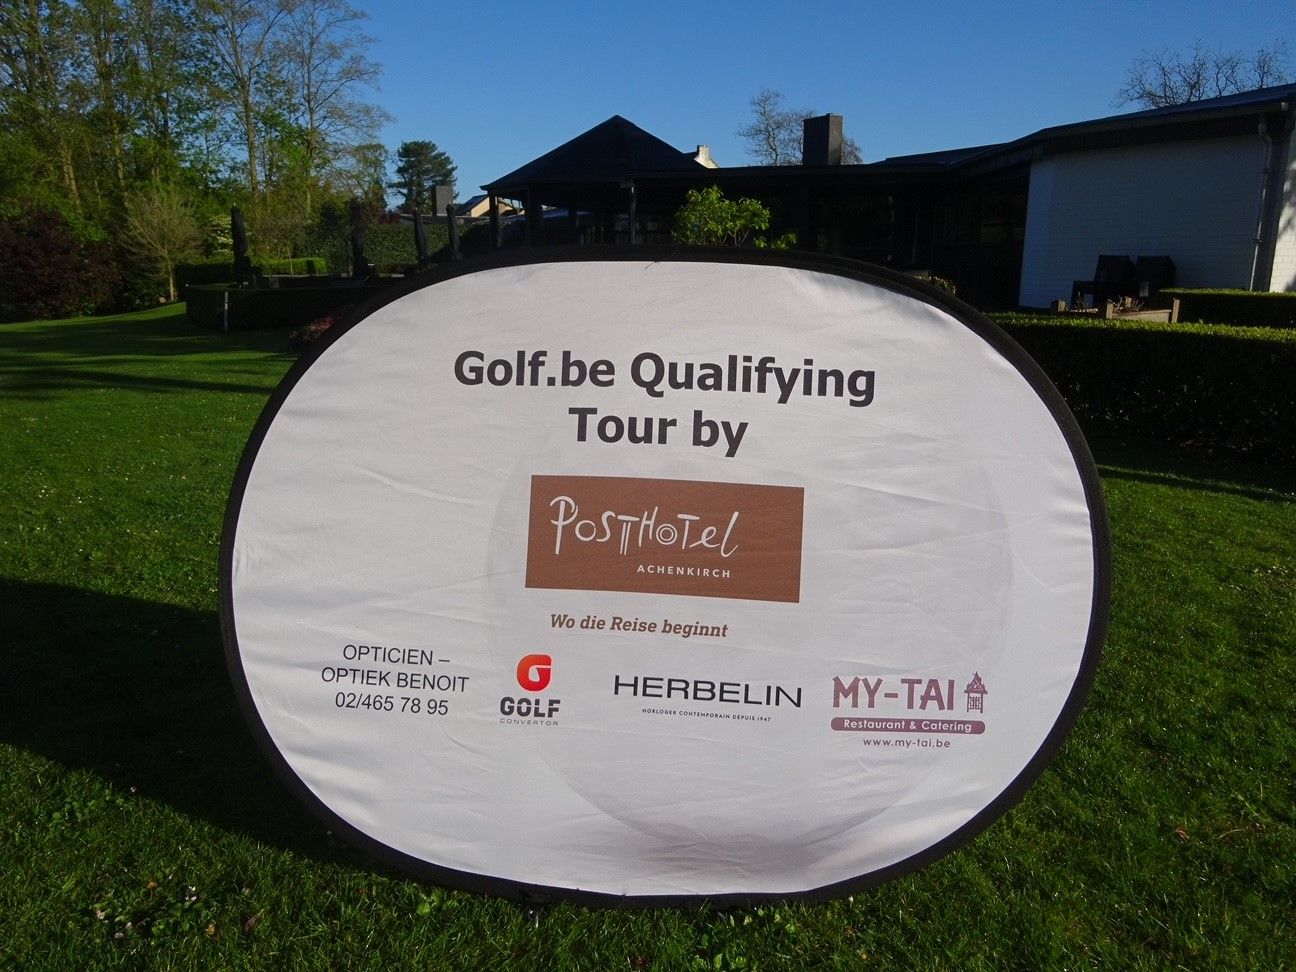 Changements sur le podium du Golf.be Qualifying Tour by Posthotel Achenkirch - Blog